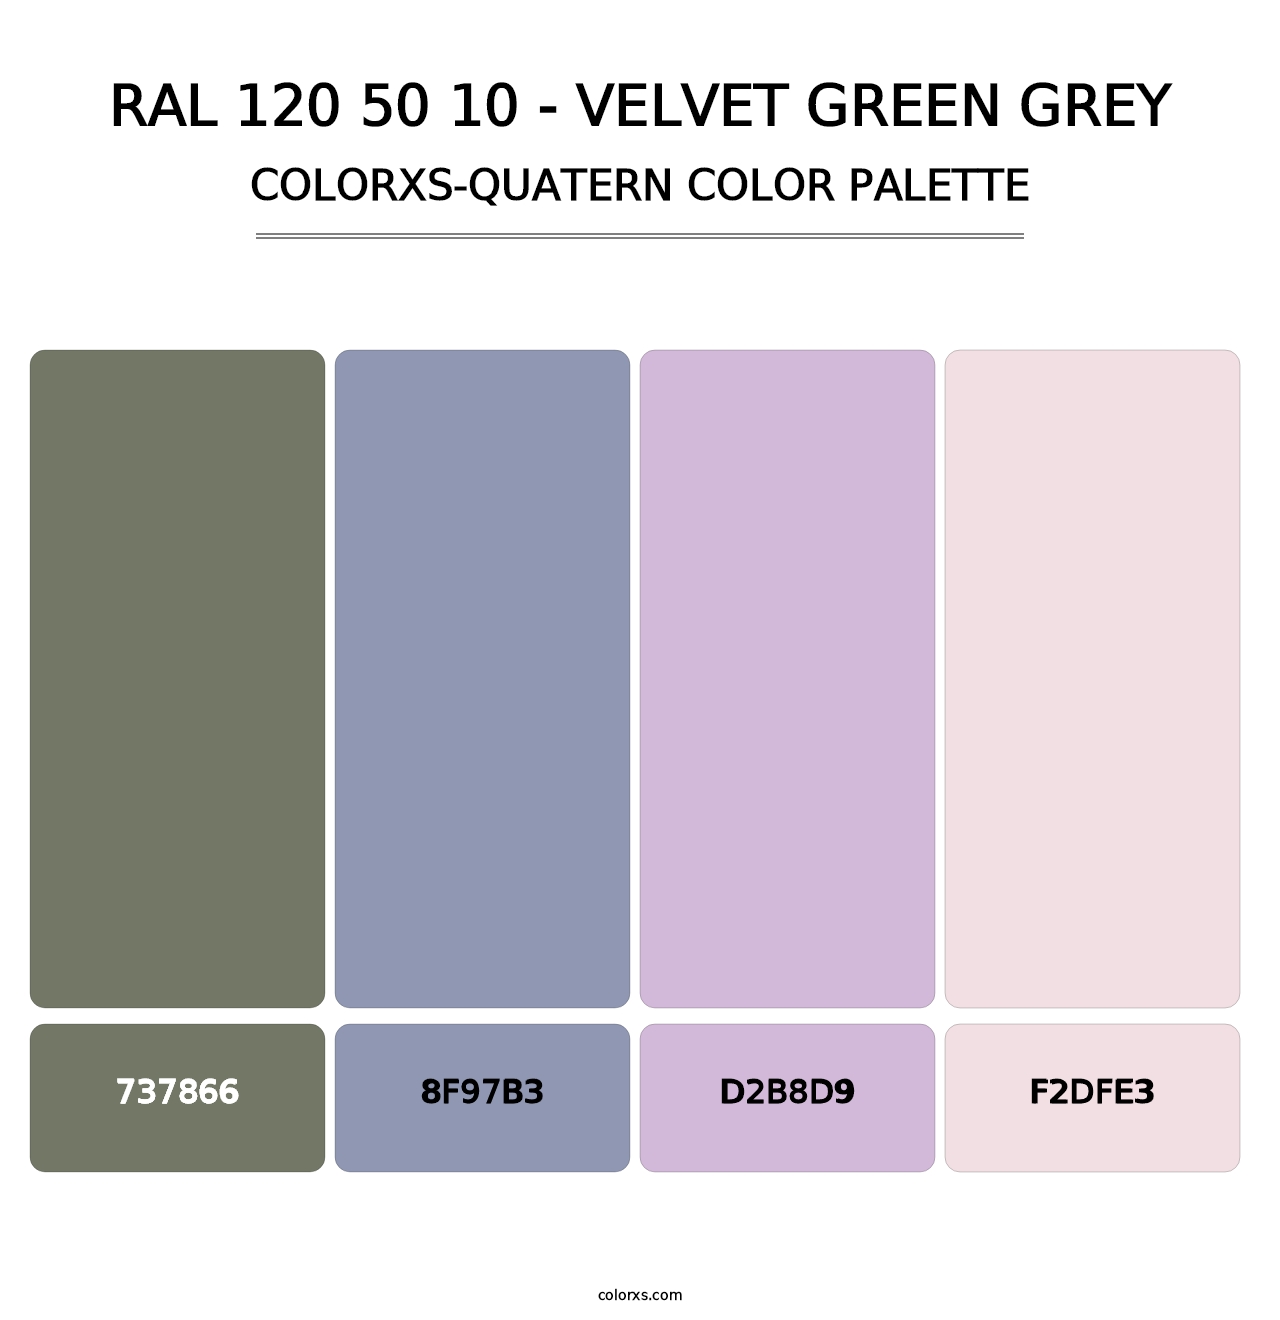 RAL 120 50 10 - Velvet Green Grey - Colorxs Quatern Palette